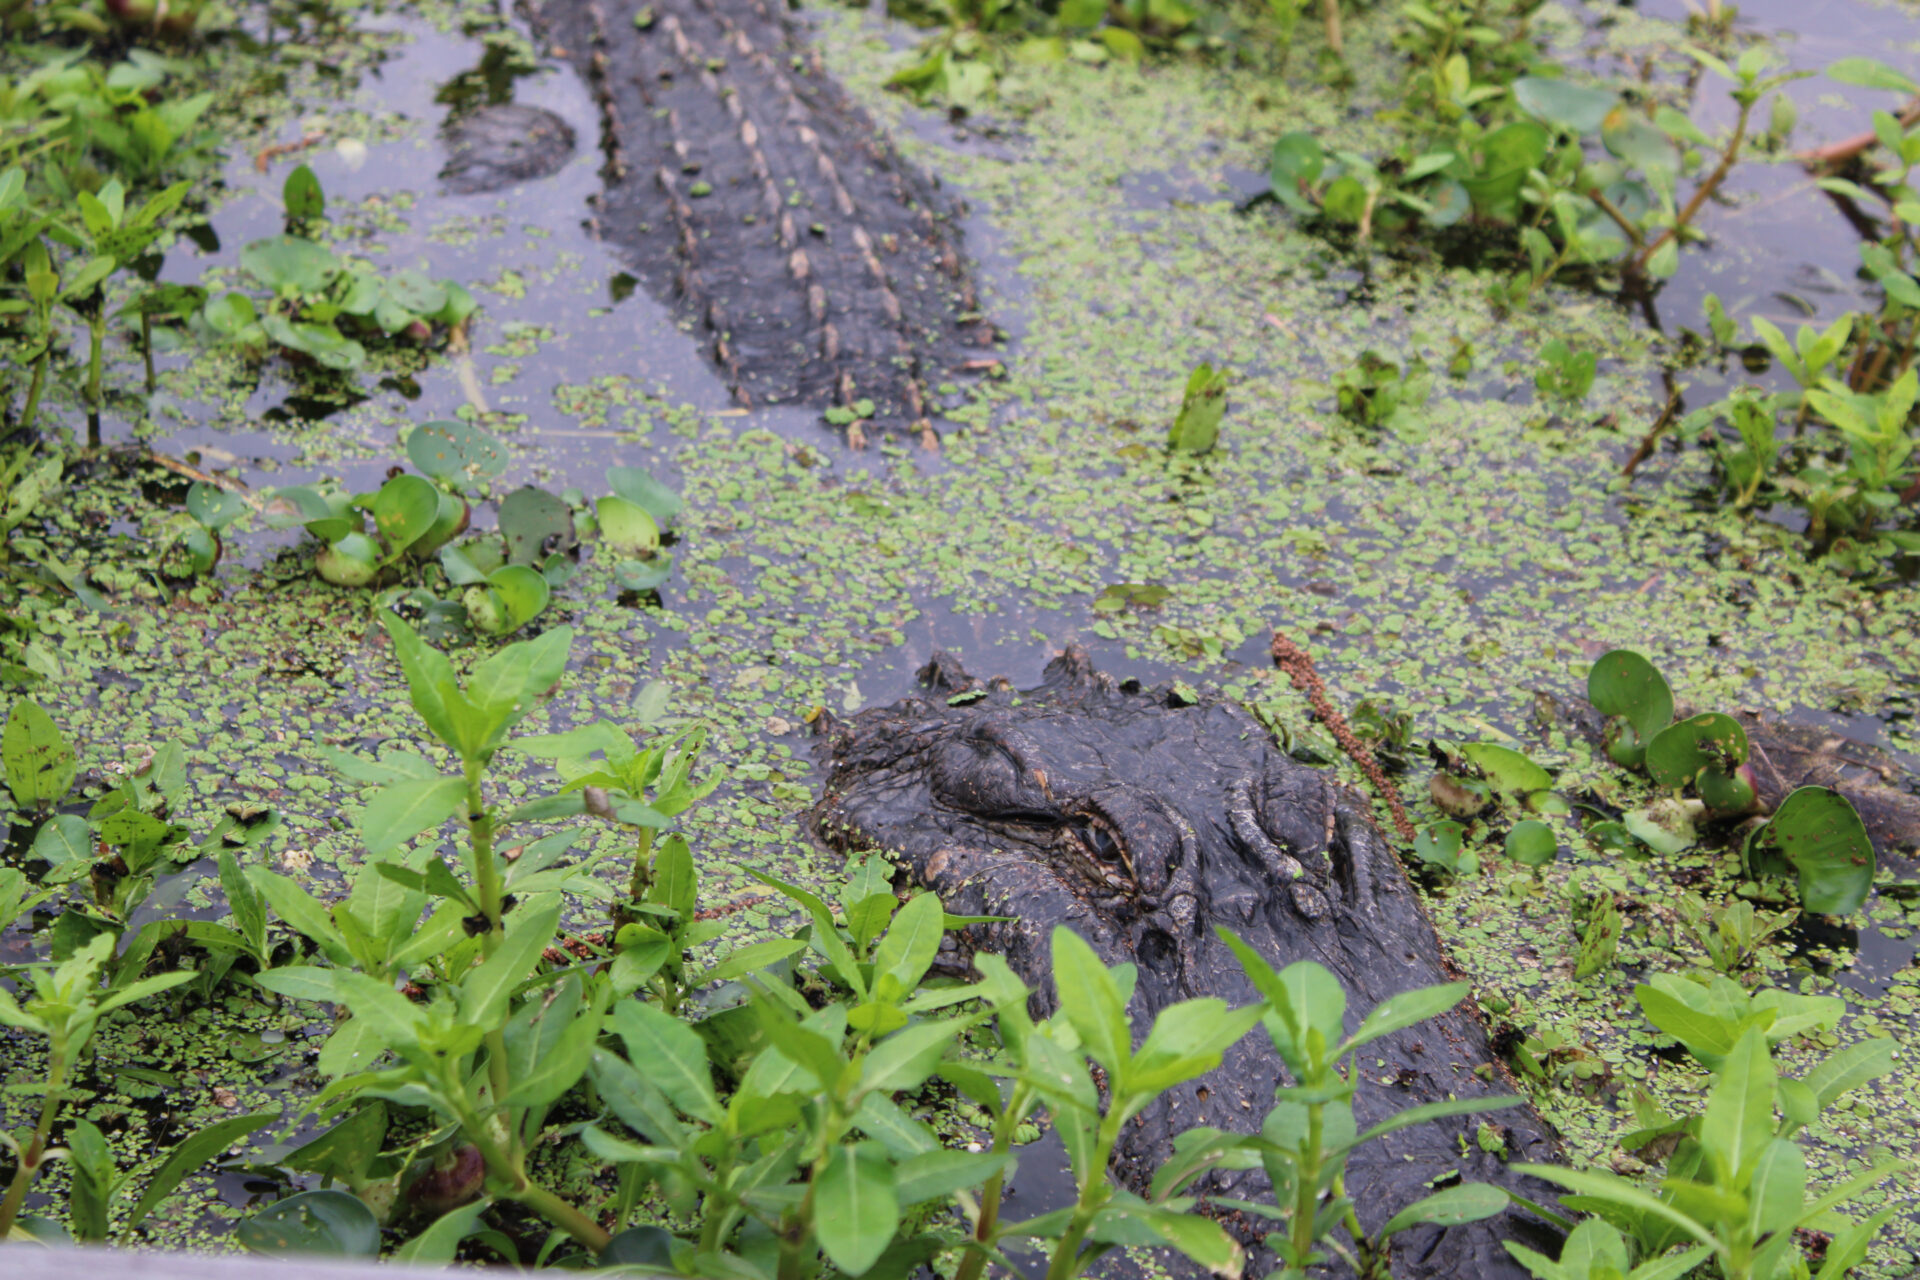 Alligator in Atchafalaya Basin in St. Martin Parish